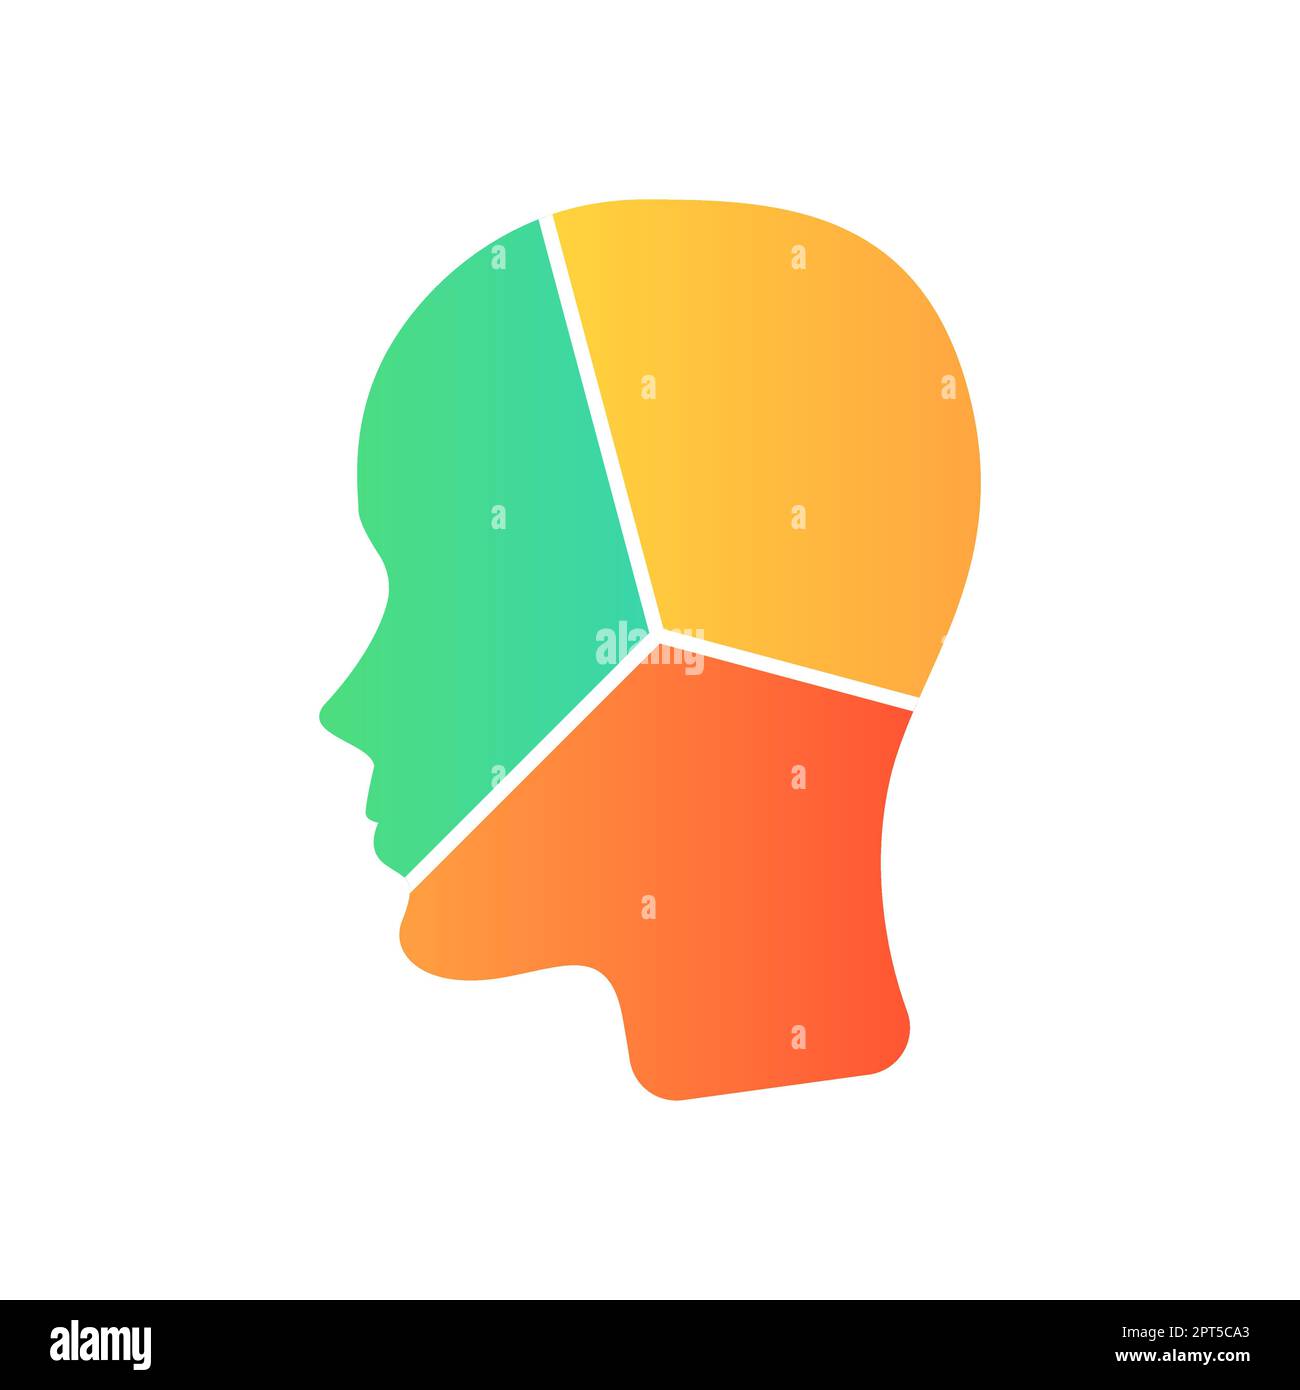 Menschlicher Kopf mit farbenfrohem Sektor-Vektor-Designelement Stock Vektor